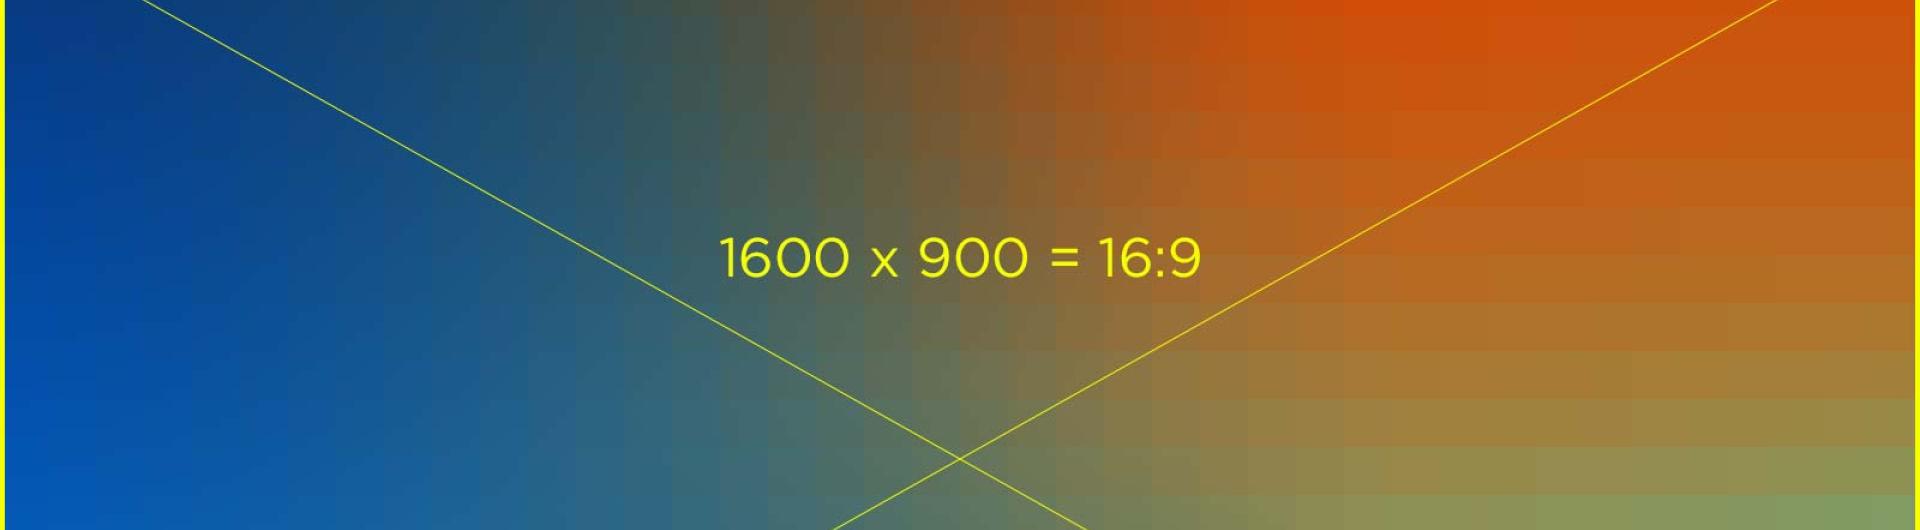 1600x900 16:9 aspect ratio